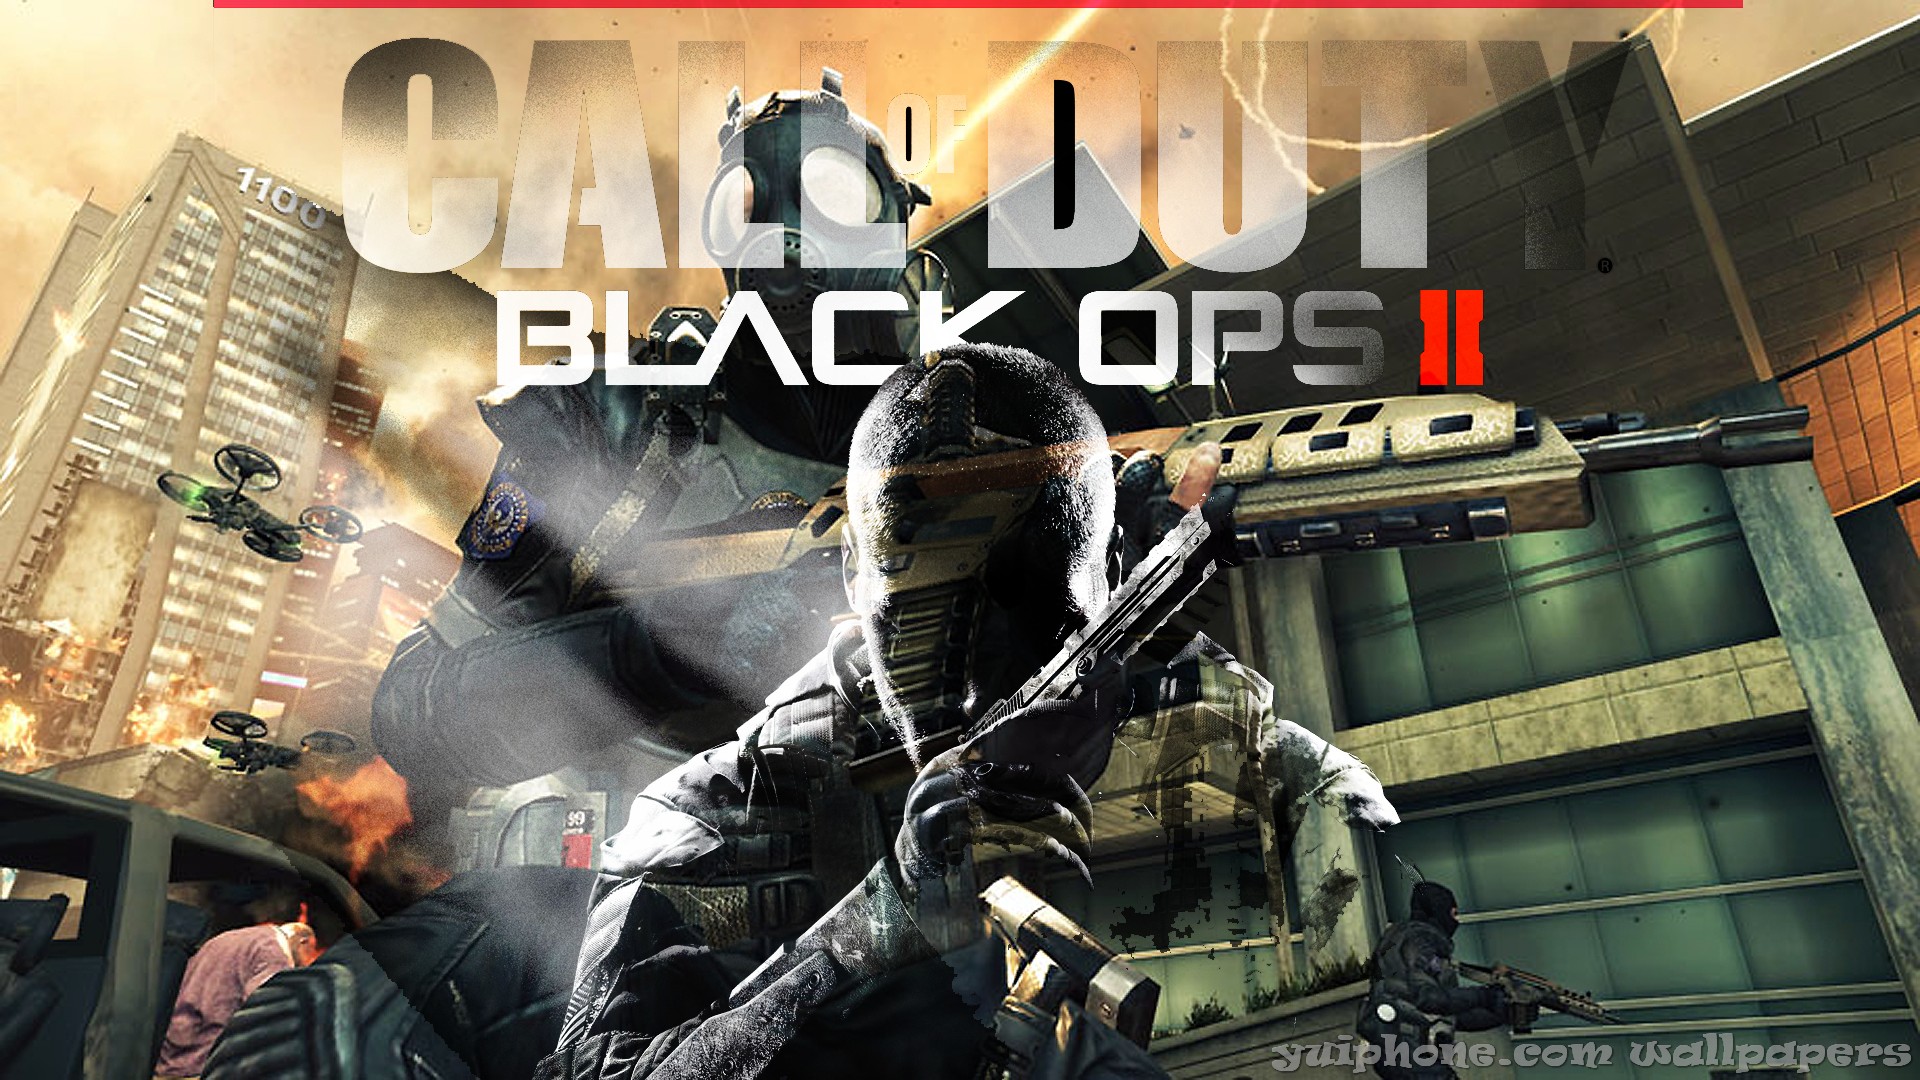 49 Black Ops Zombies Wallpaper 1080p On Wallpapersafari